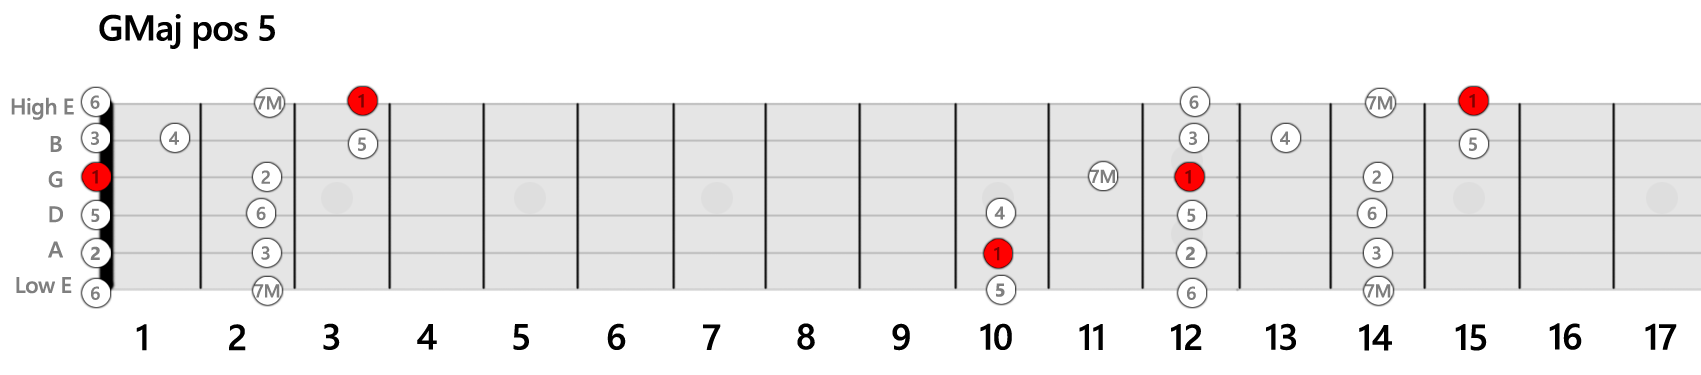 GMaj-Position-Guitar-Scale-5